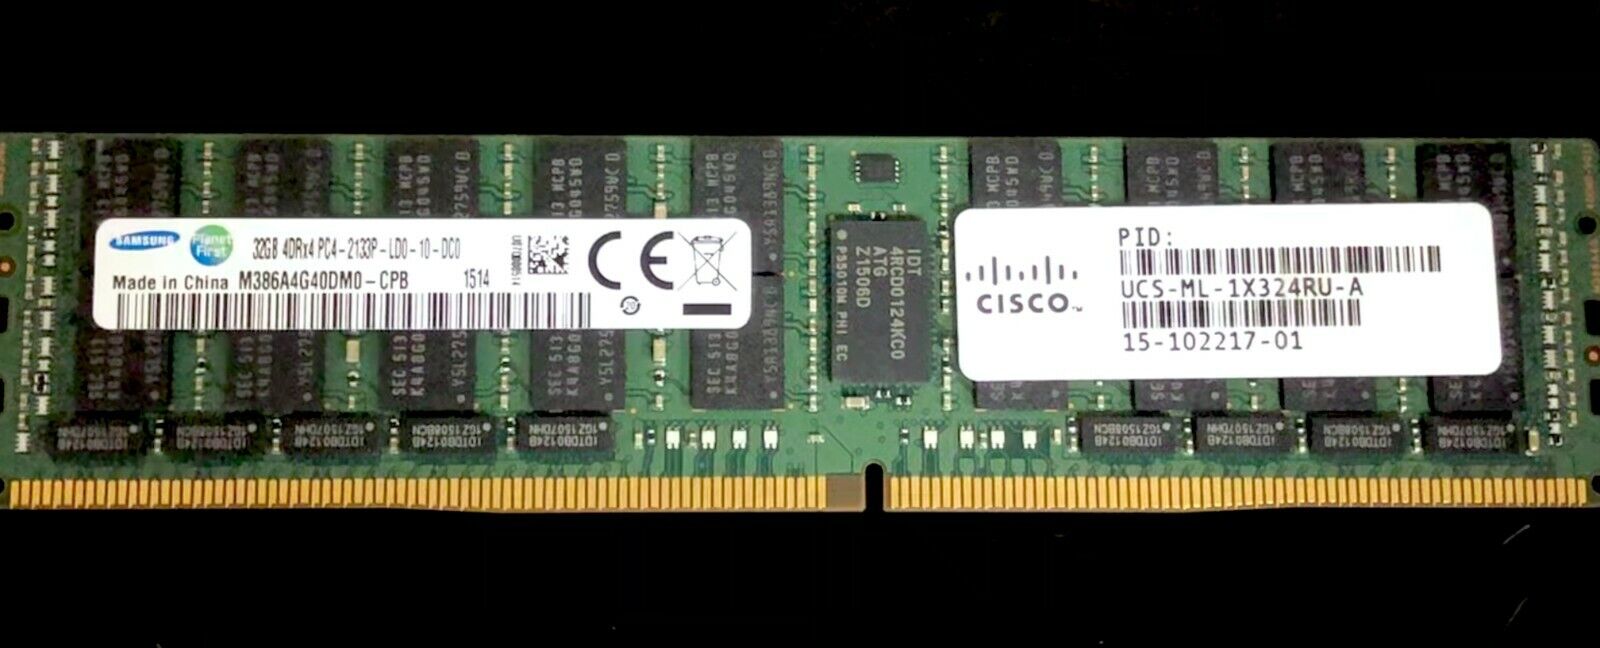 SAMSUNG CISCO 15-102217-01 32GB Memory DIMM DDR4 2133MHz 4Rx4 PC4-2133P